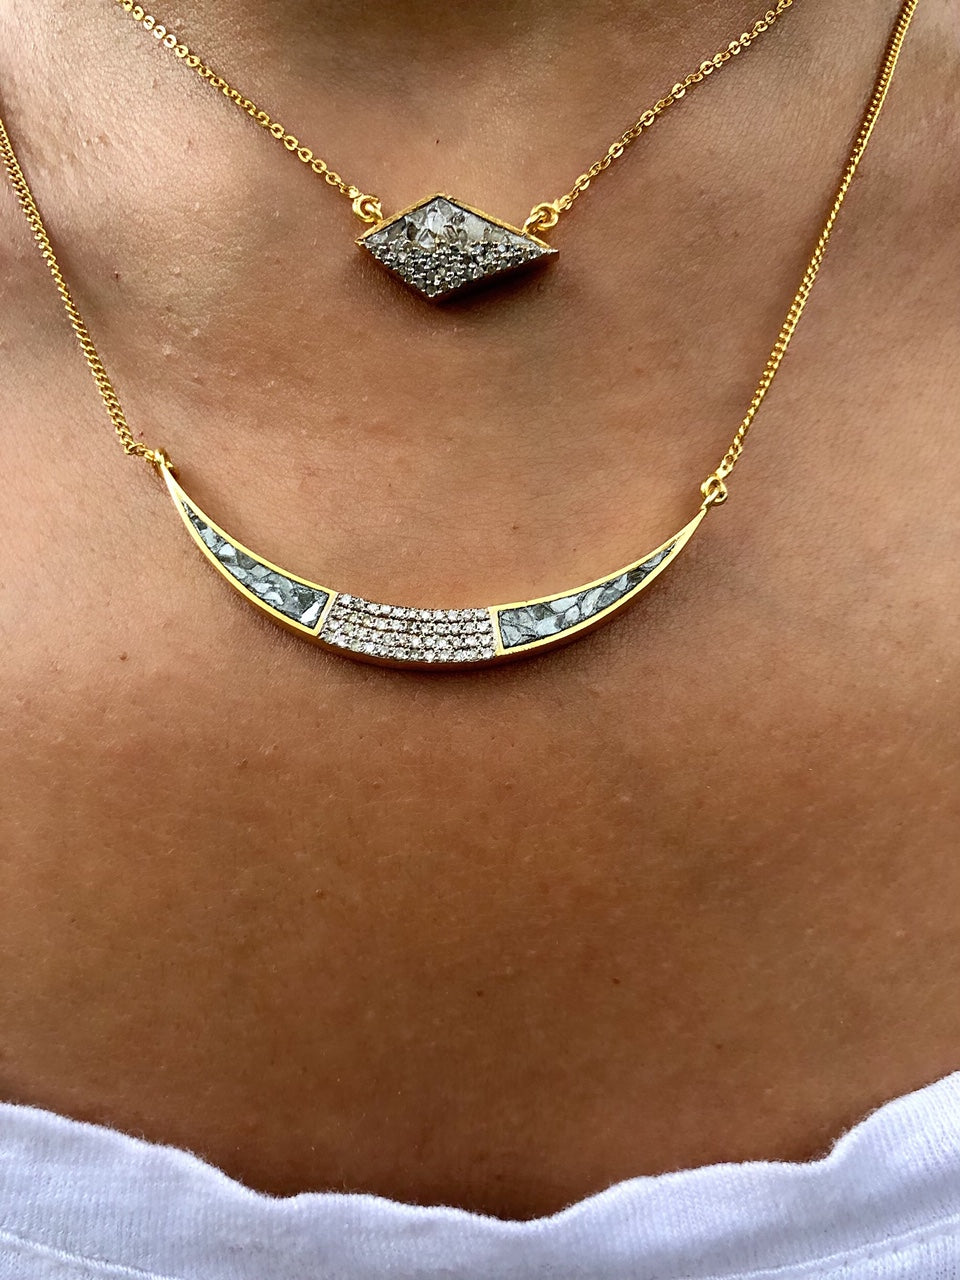 diamond pendant on gold chain necklace